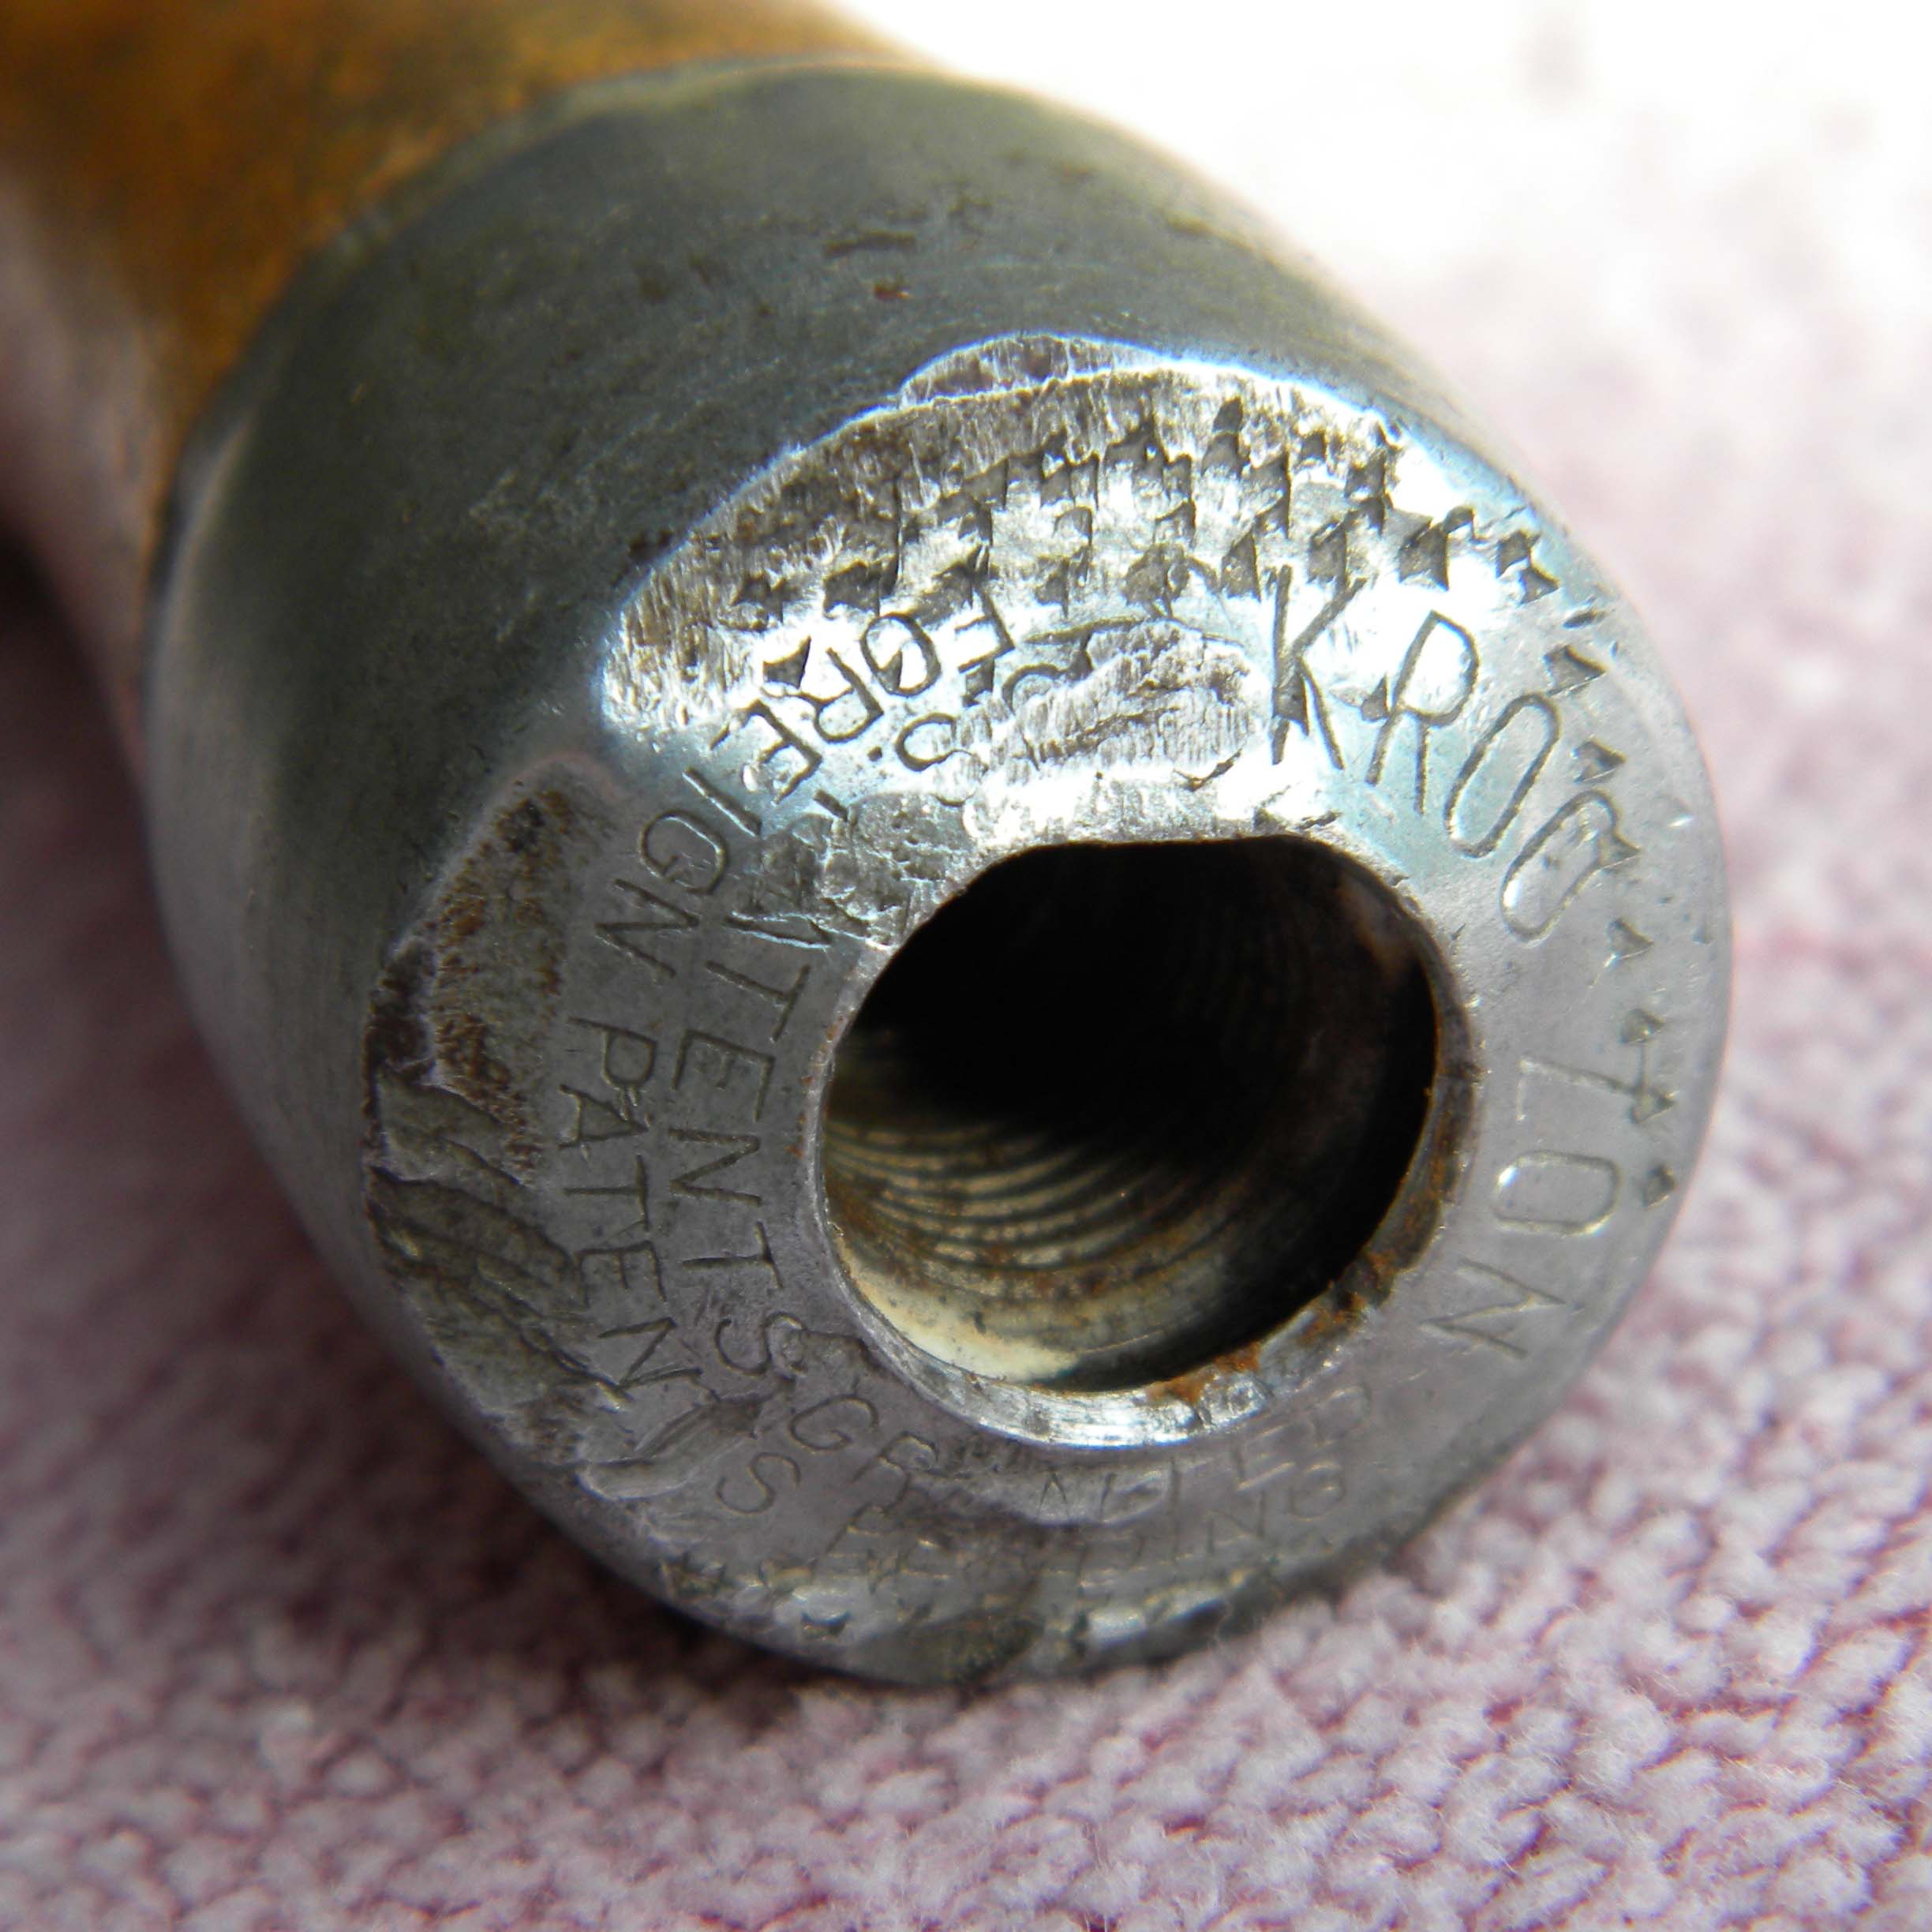 DSCN1205 Close up Wrench Handle.jpg